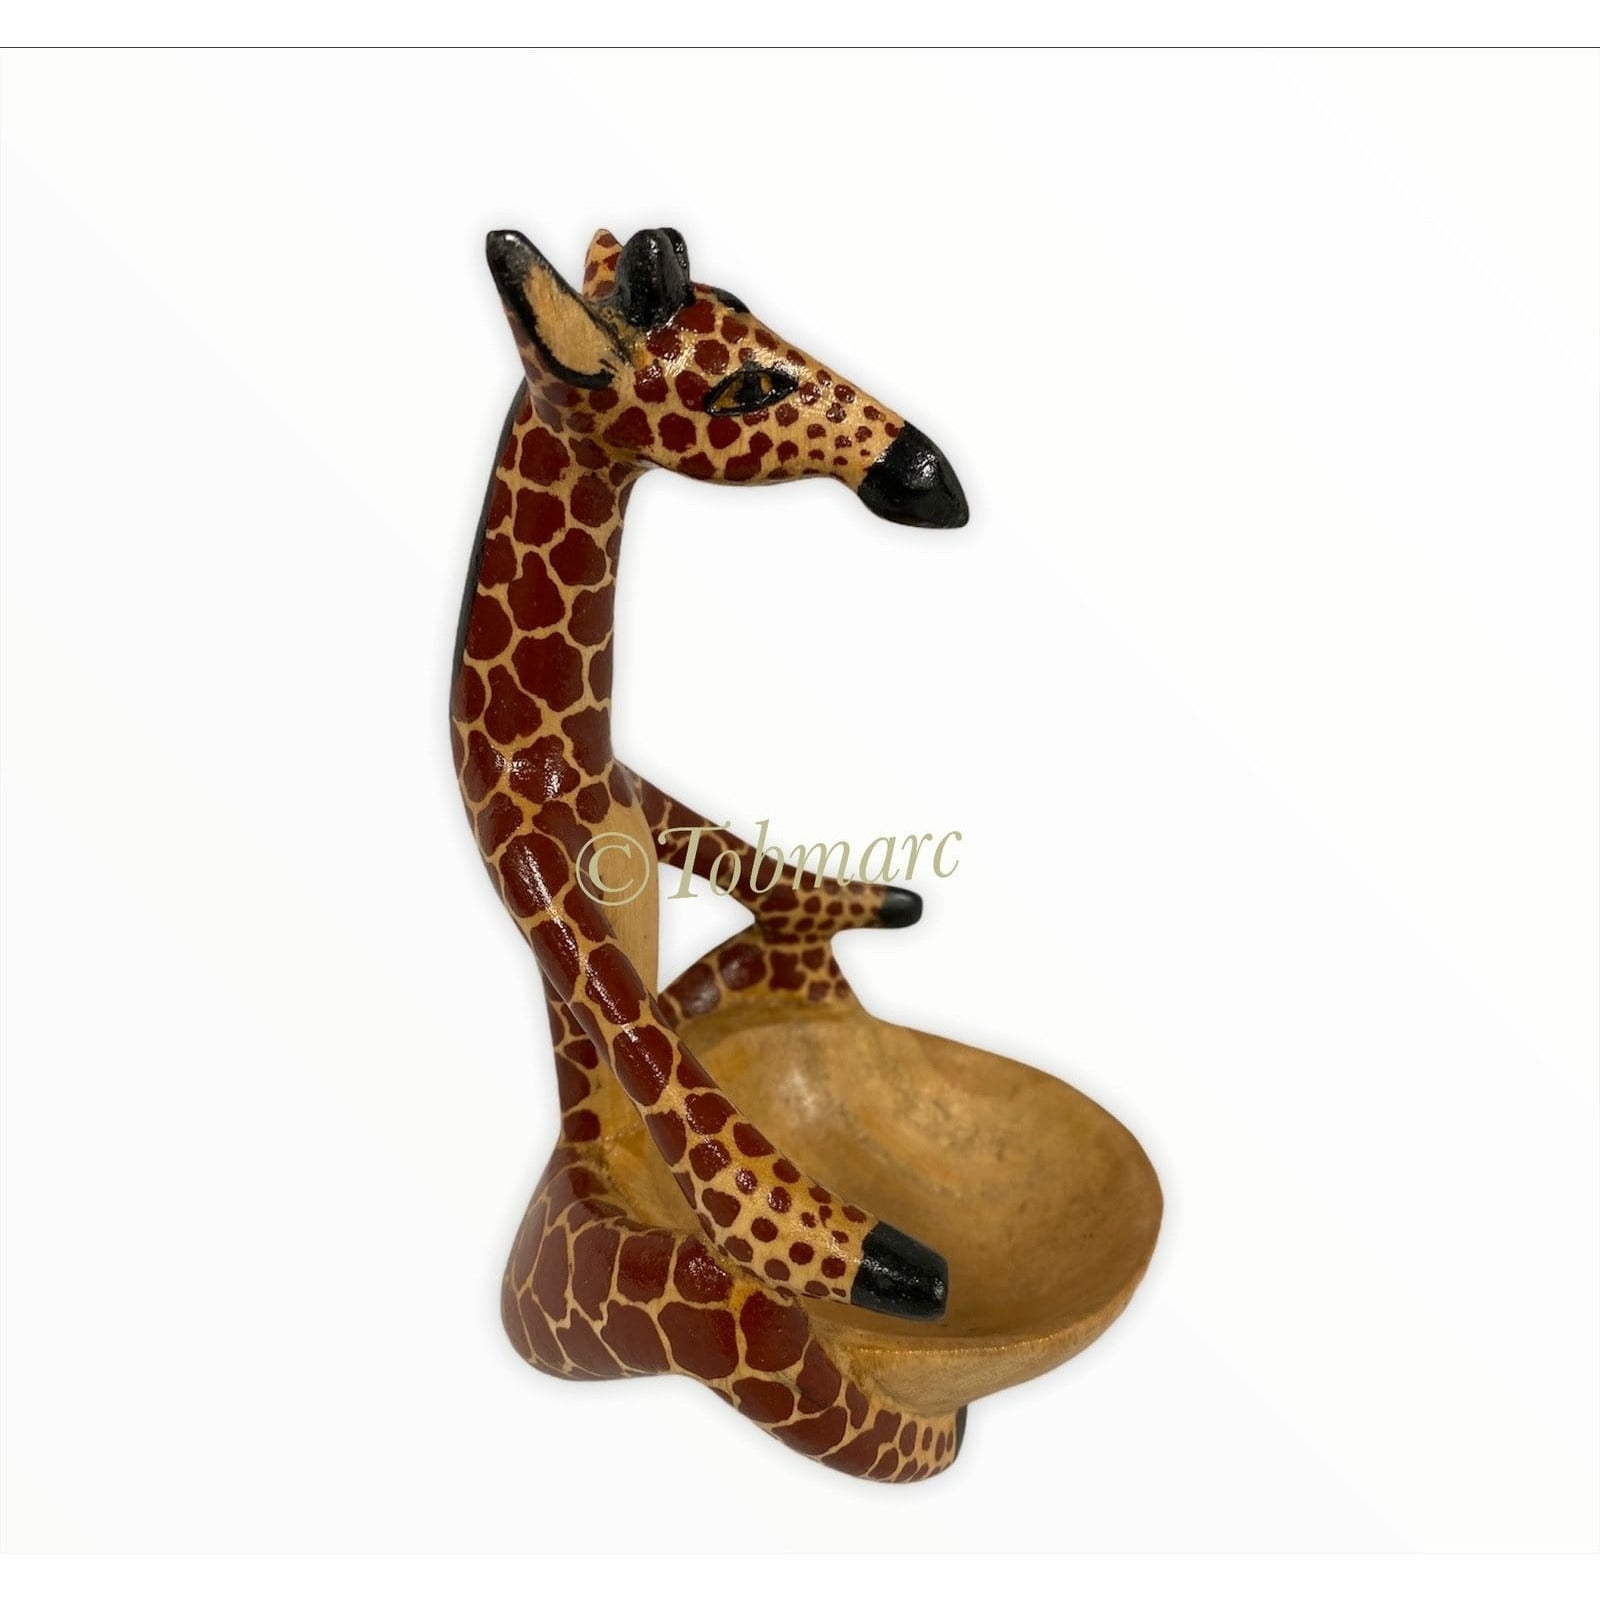 Tobmarc Home Decor & Gifts  Handcrafted Yoga Giraffe Bowl